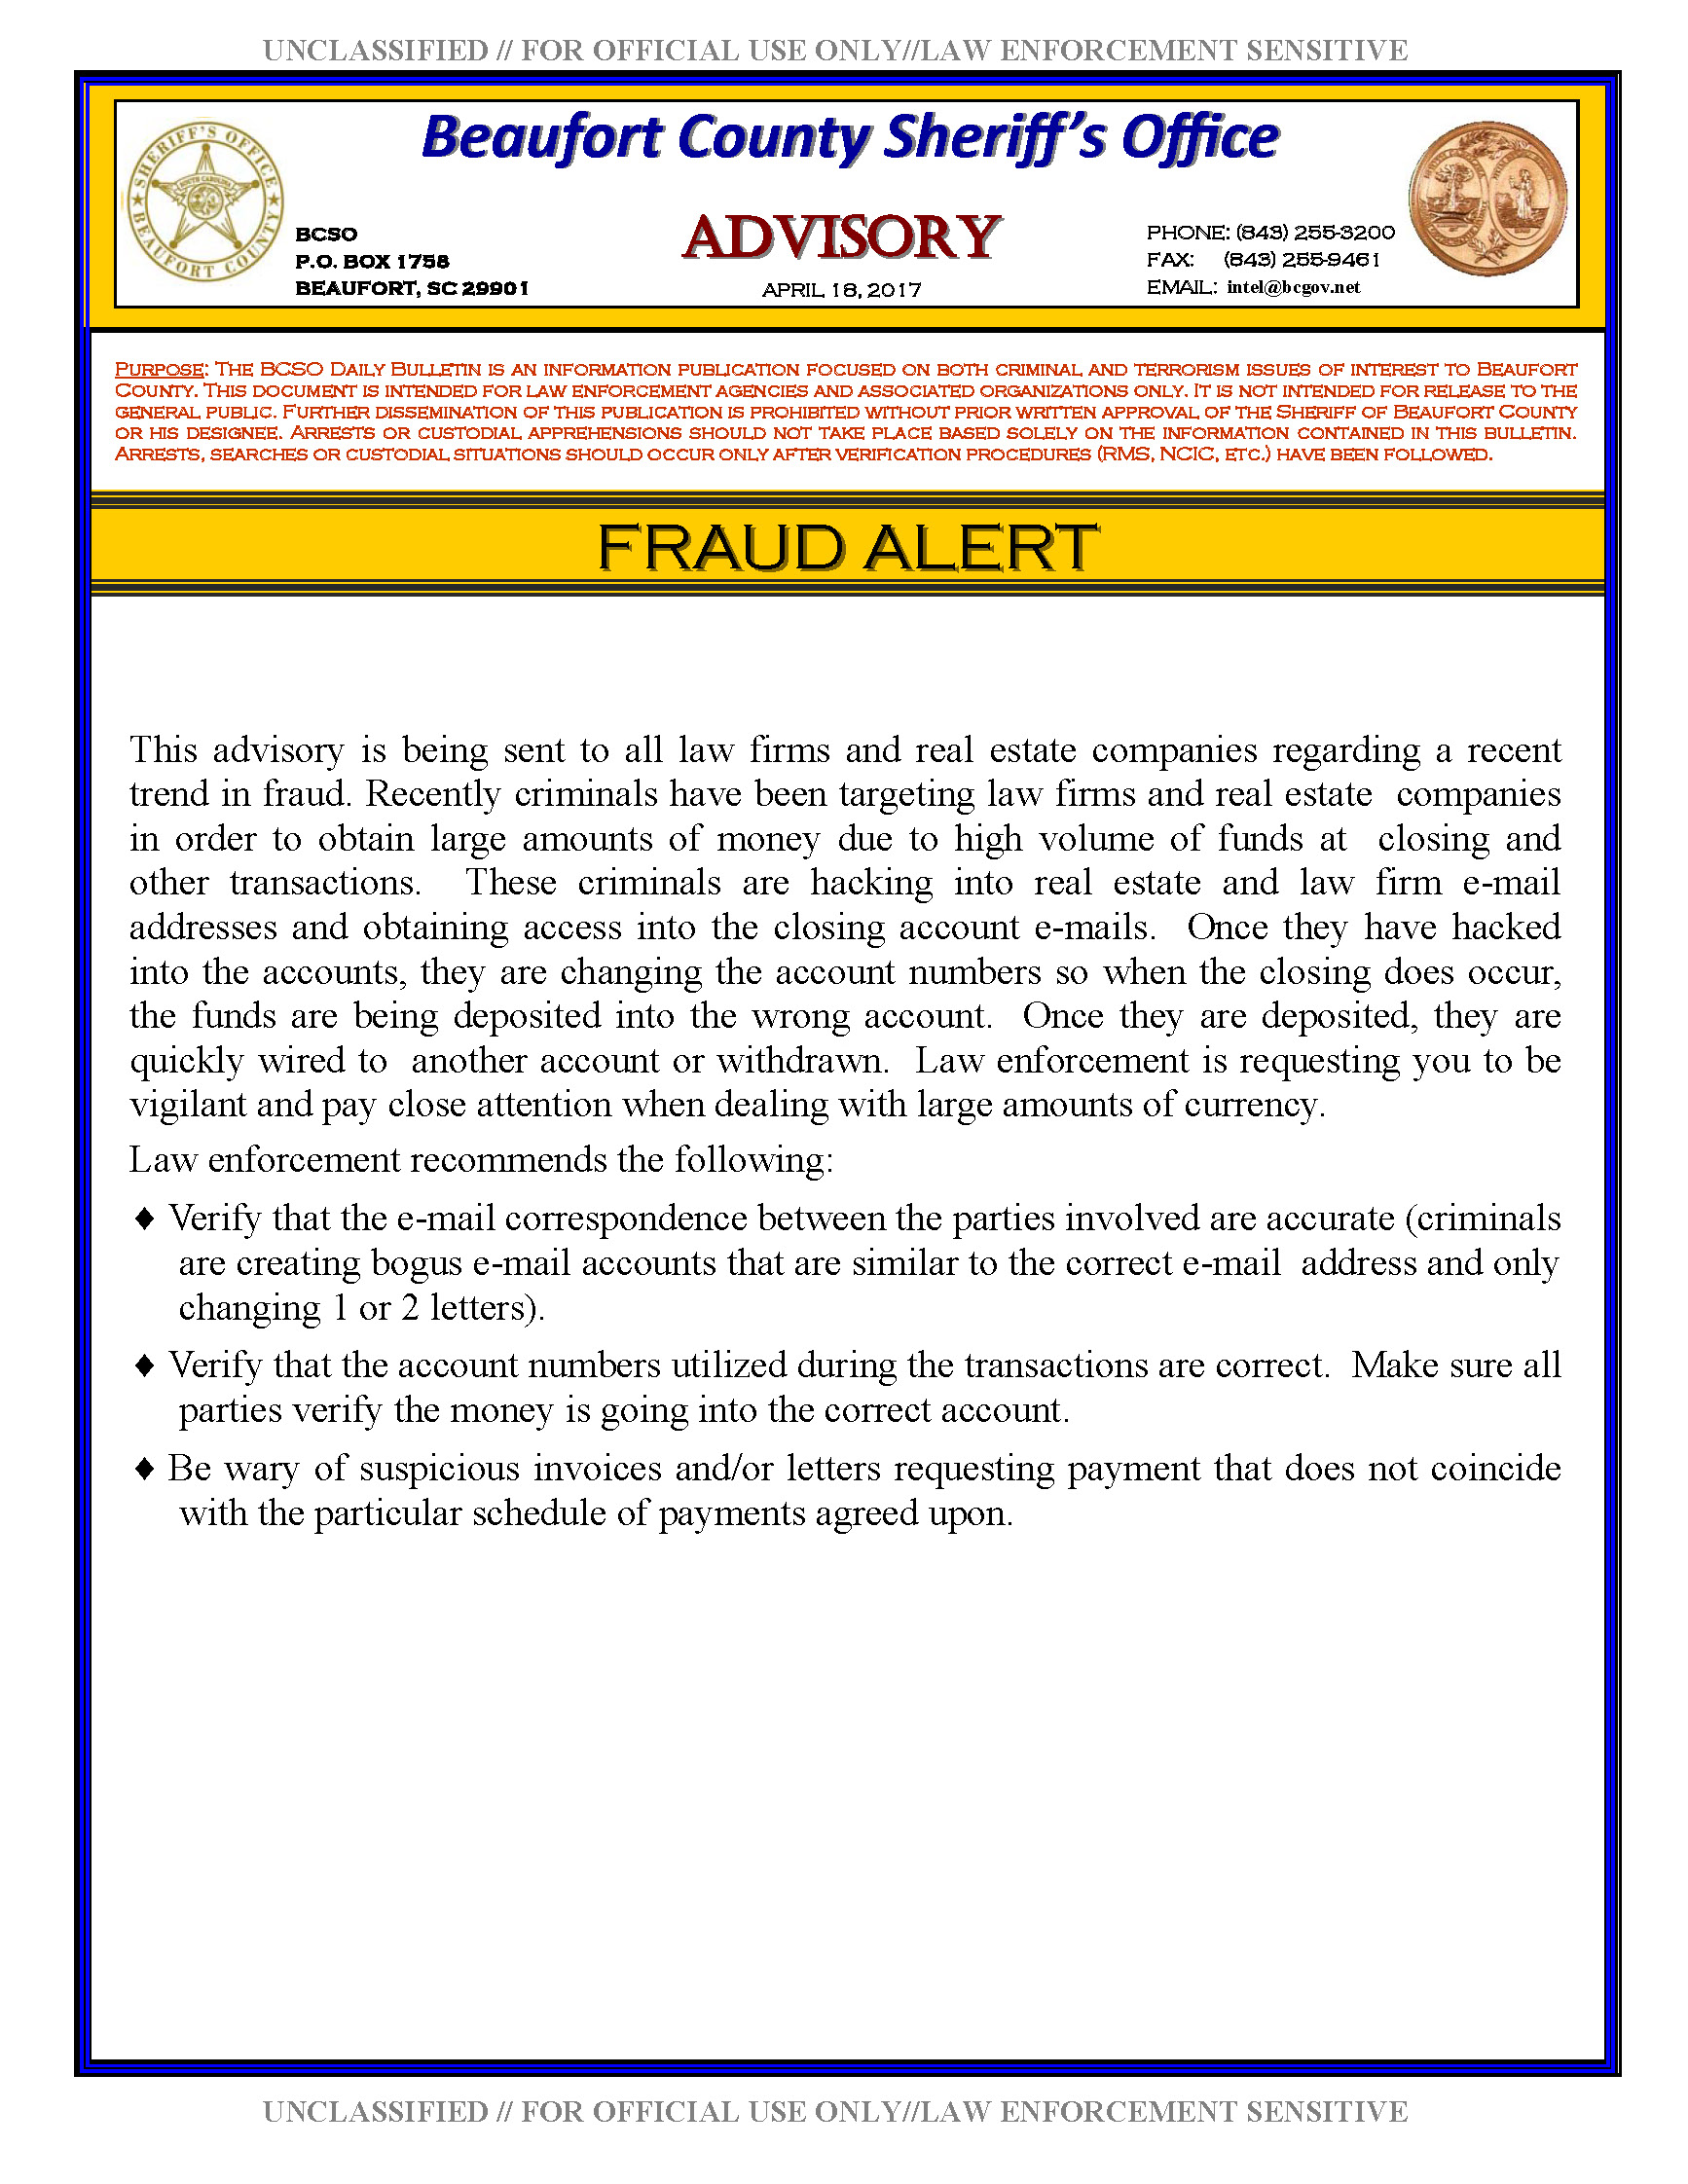 Beaufort County Fraud Alert